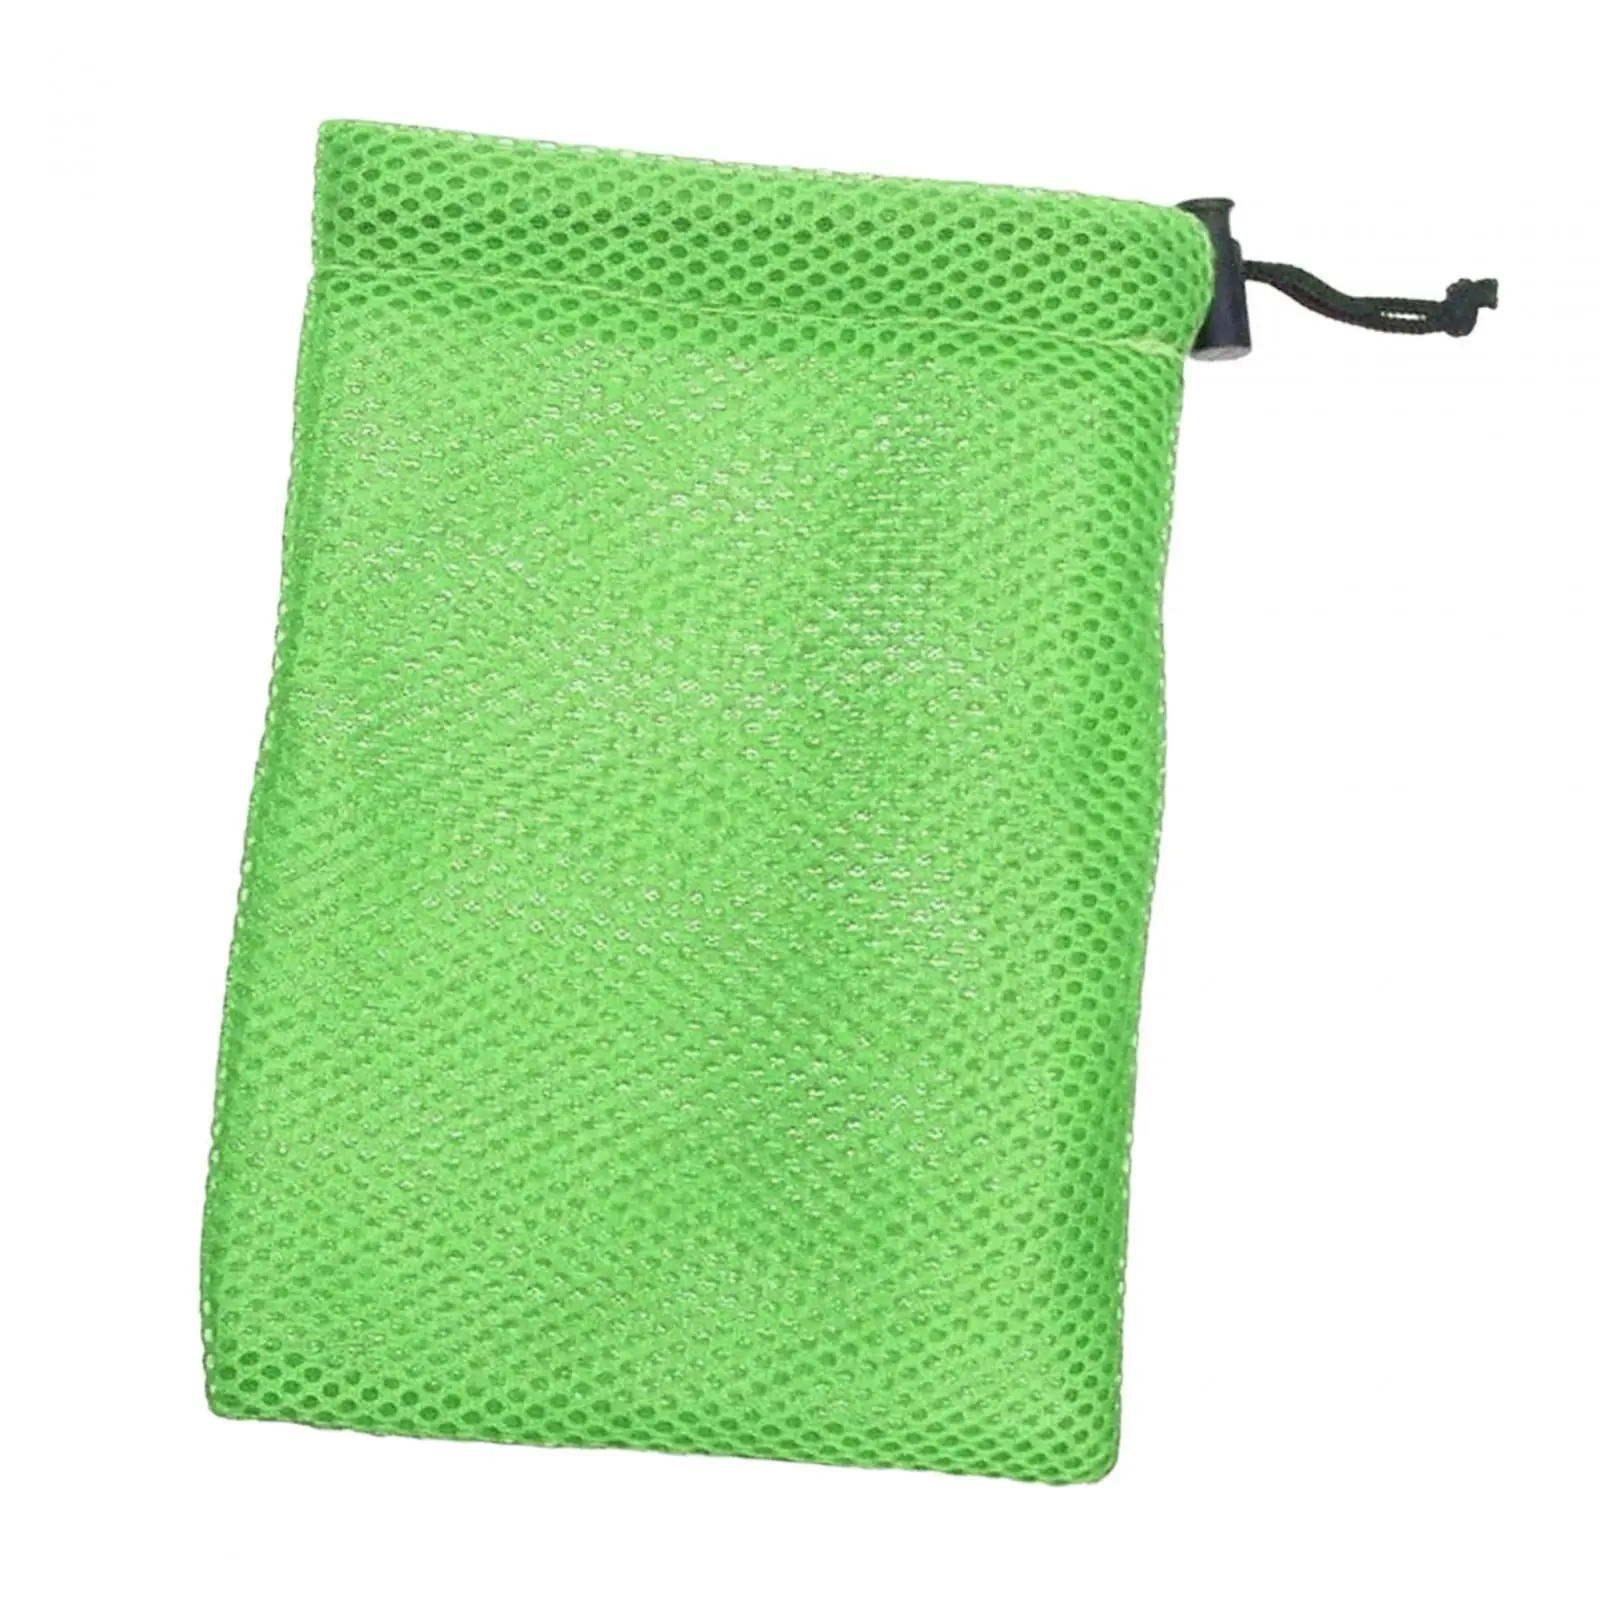 Small Mesh Drawstring Bag Sport Equipment Bags Lightweight Stuff Sack